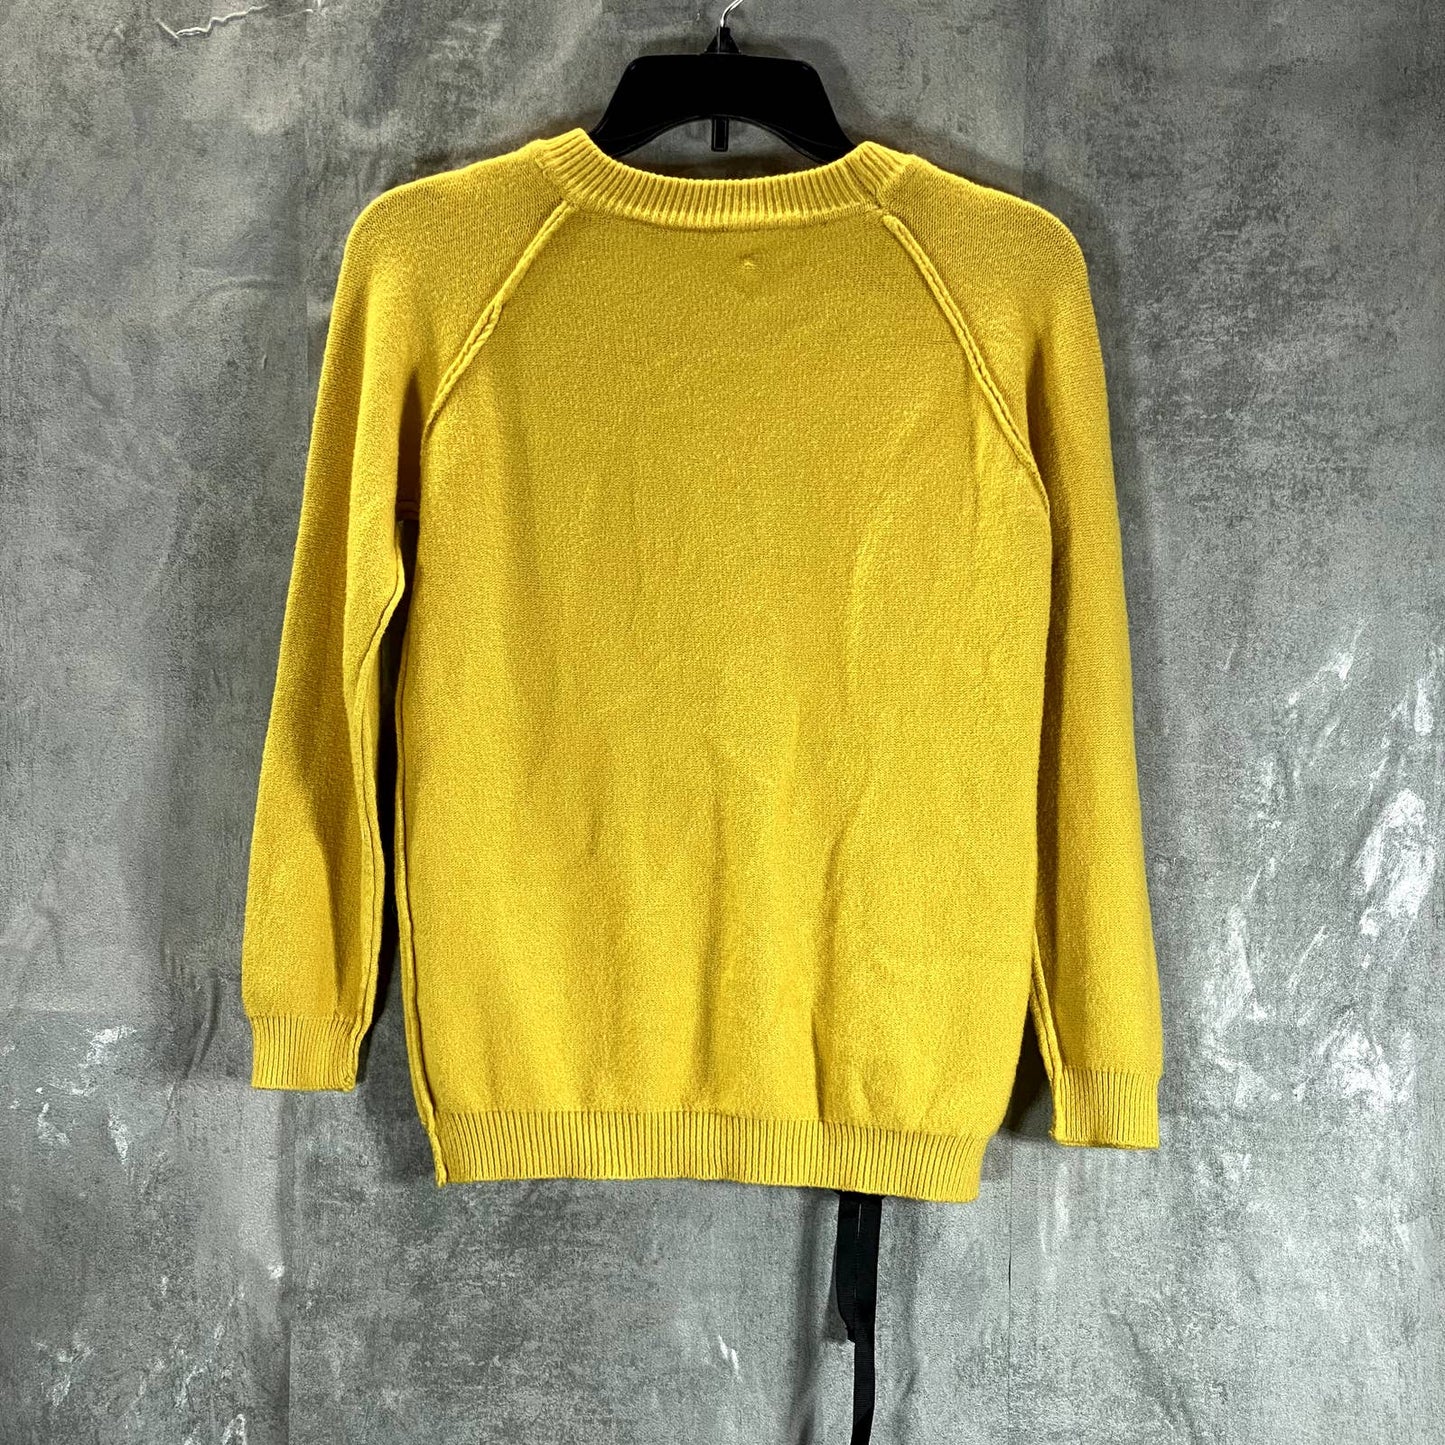 NO BRAND Women's Yellow Crewneck Ribbon-Tie Hem Pullover Sweater SZ M